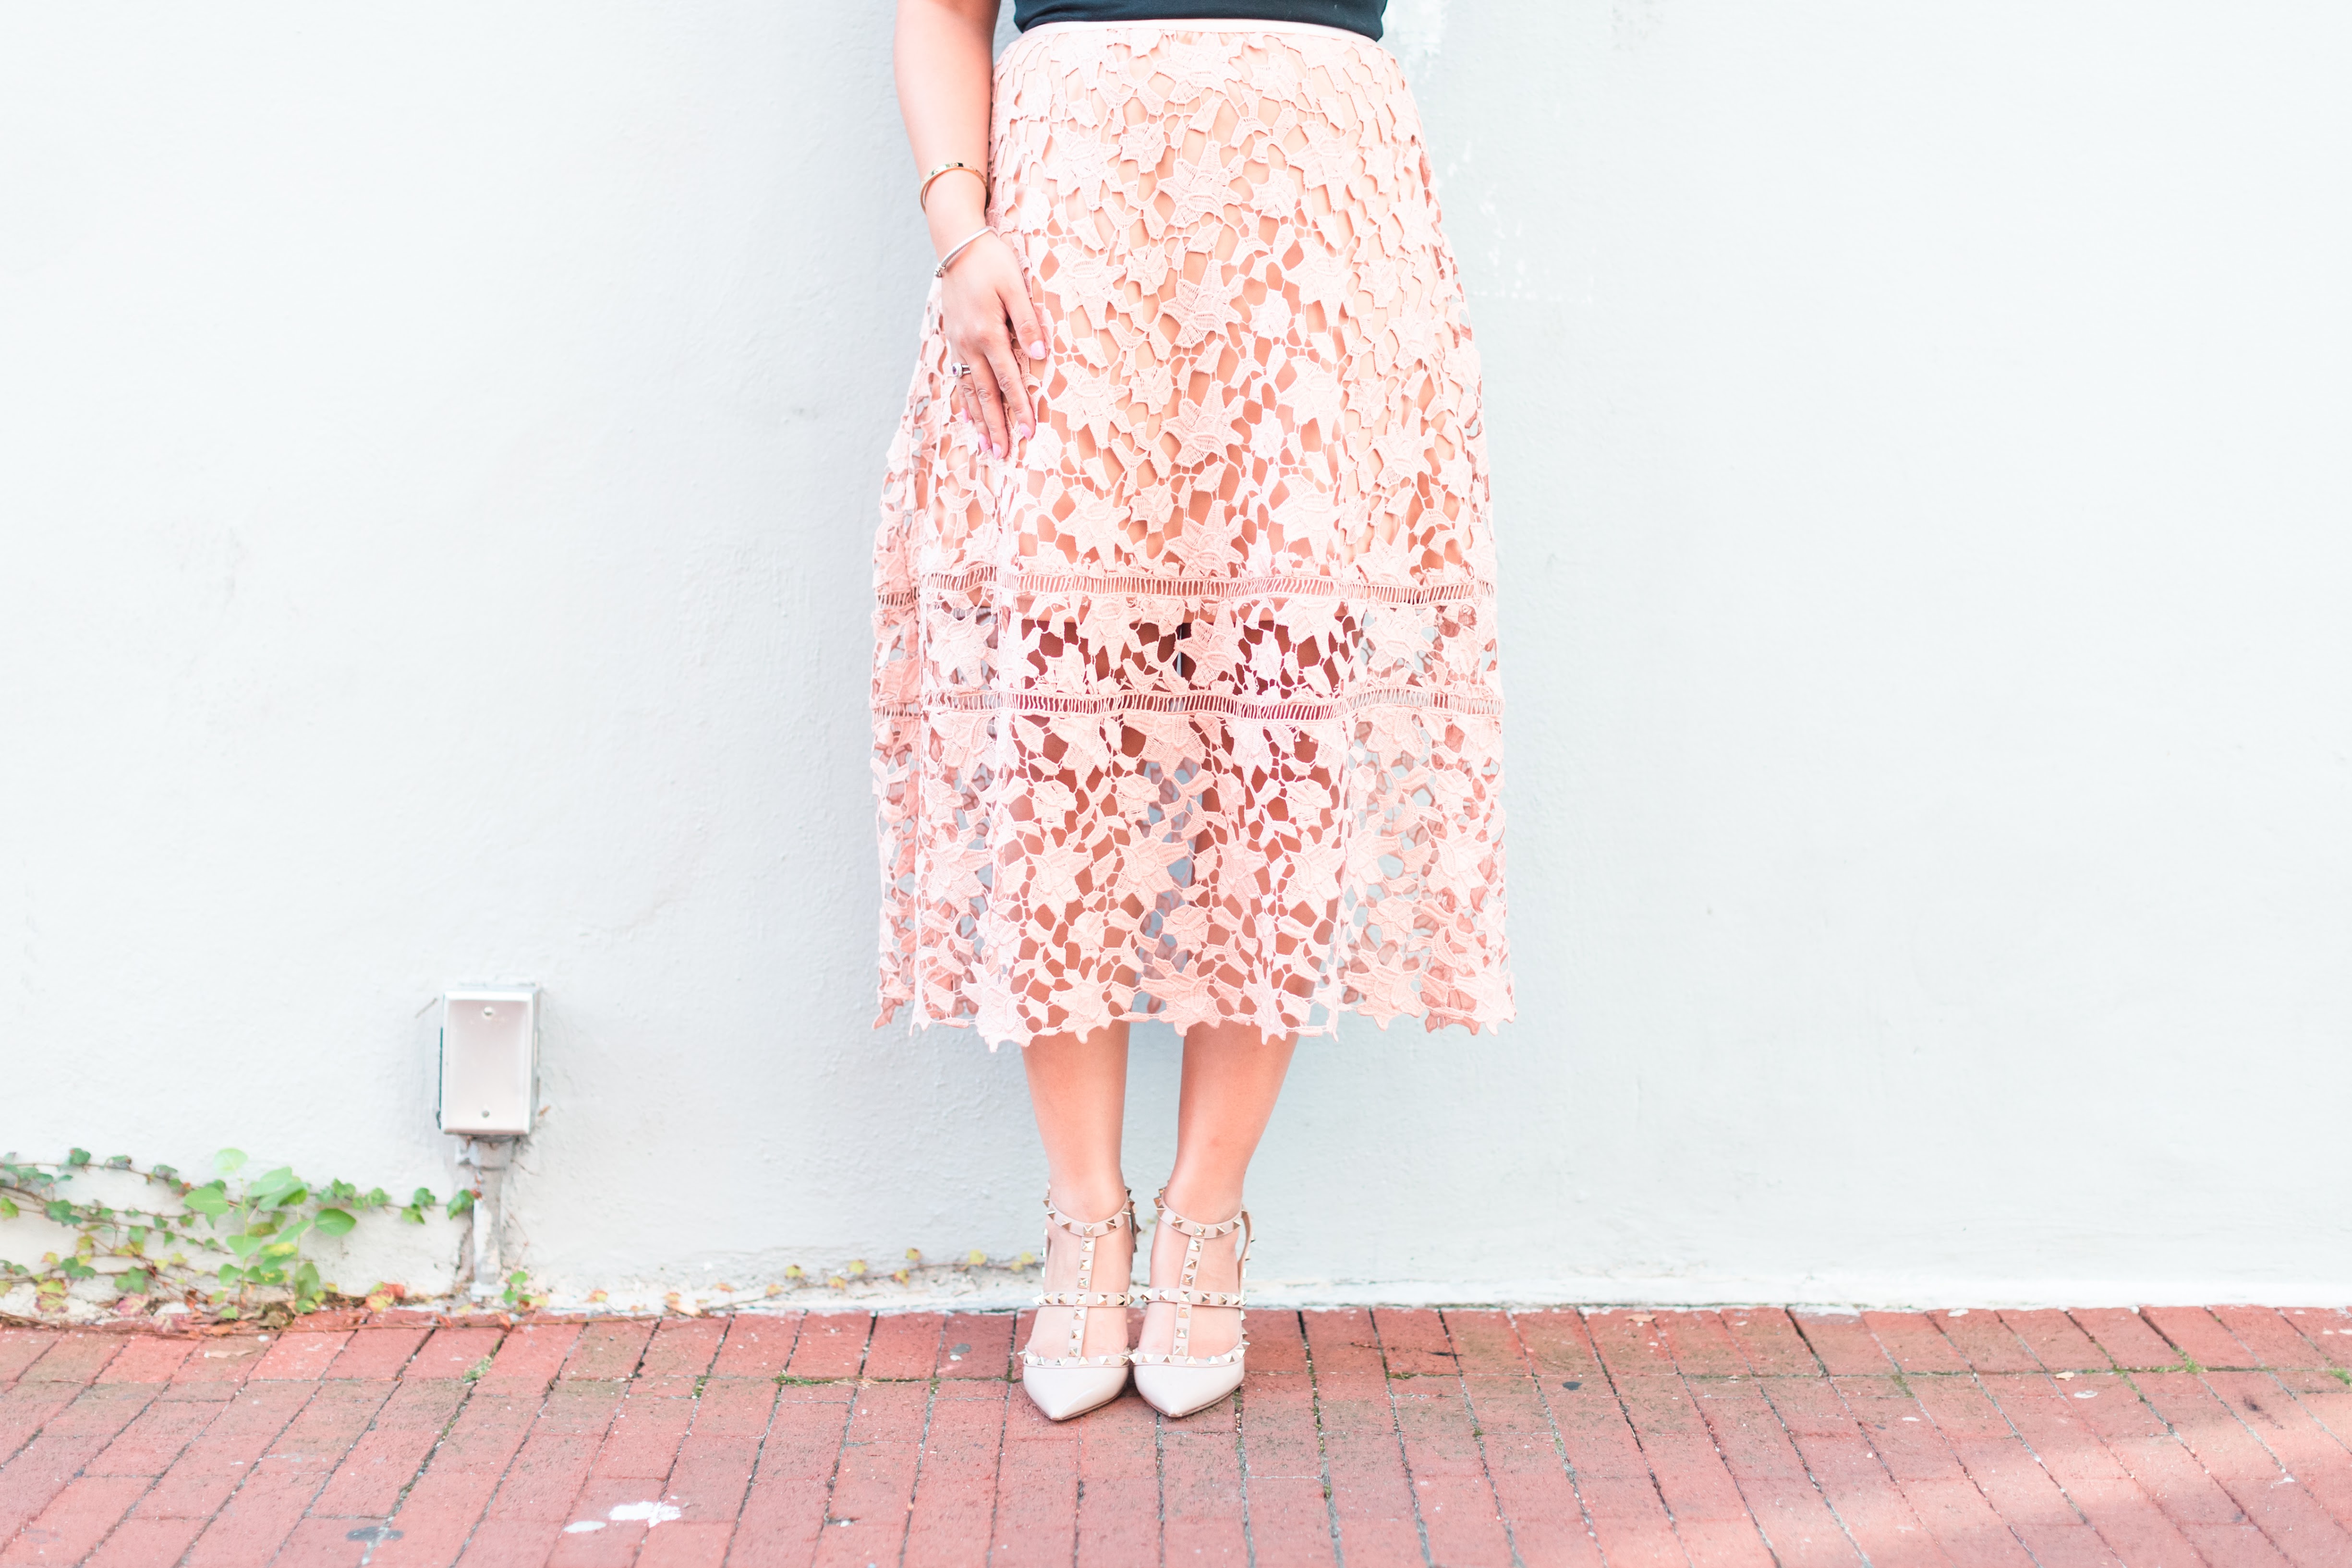 Missguided Pink Crochet Skirt - Stylista Esquire - @stylistaesquire